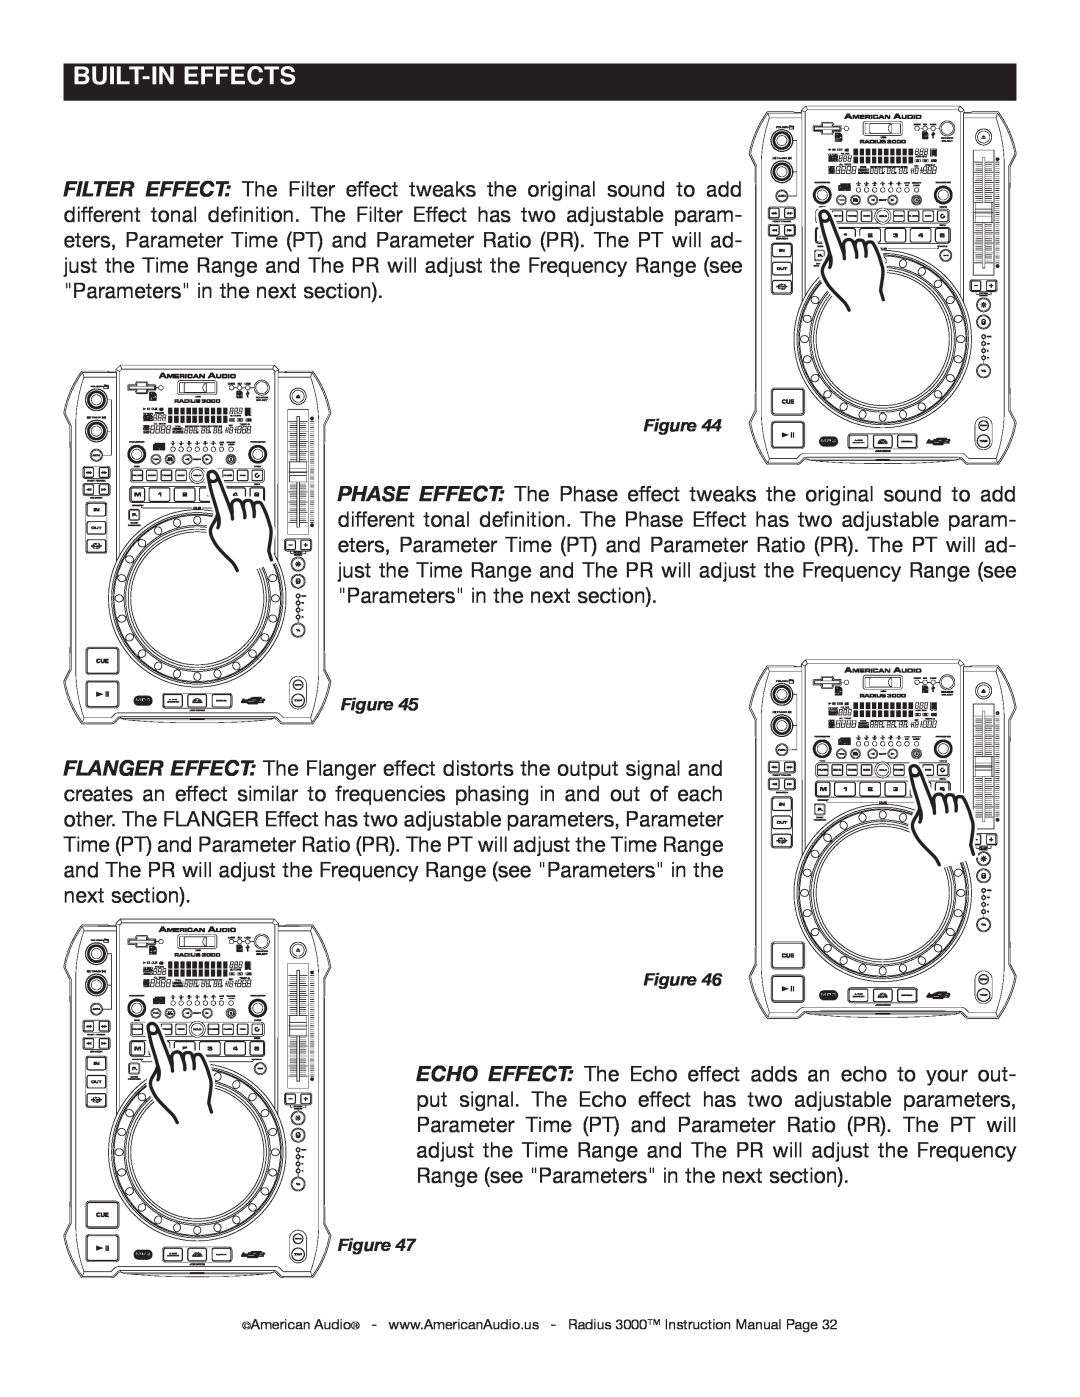 American Audio Radius 3000 manual Built-ineffects 